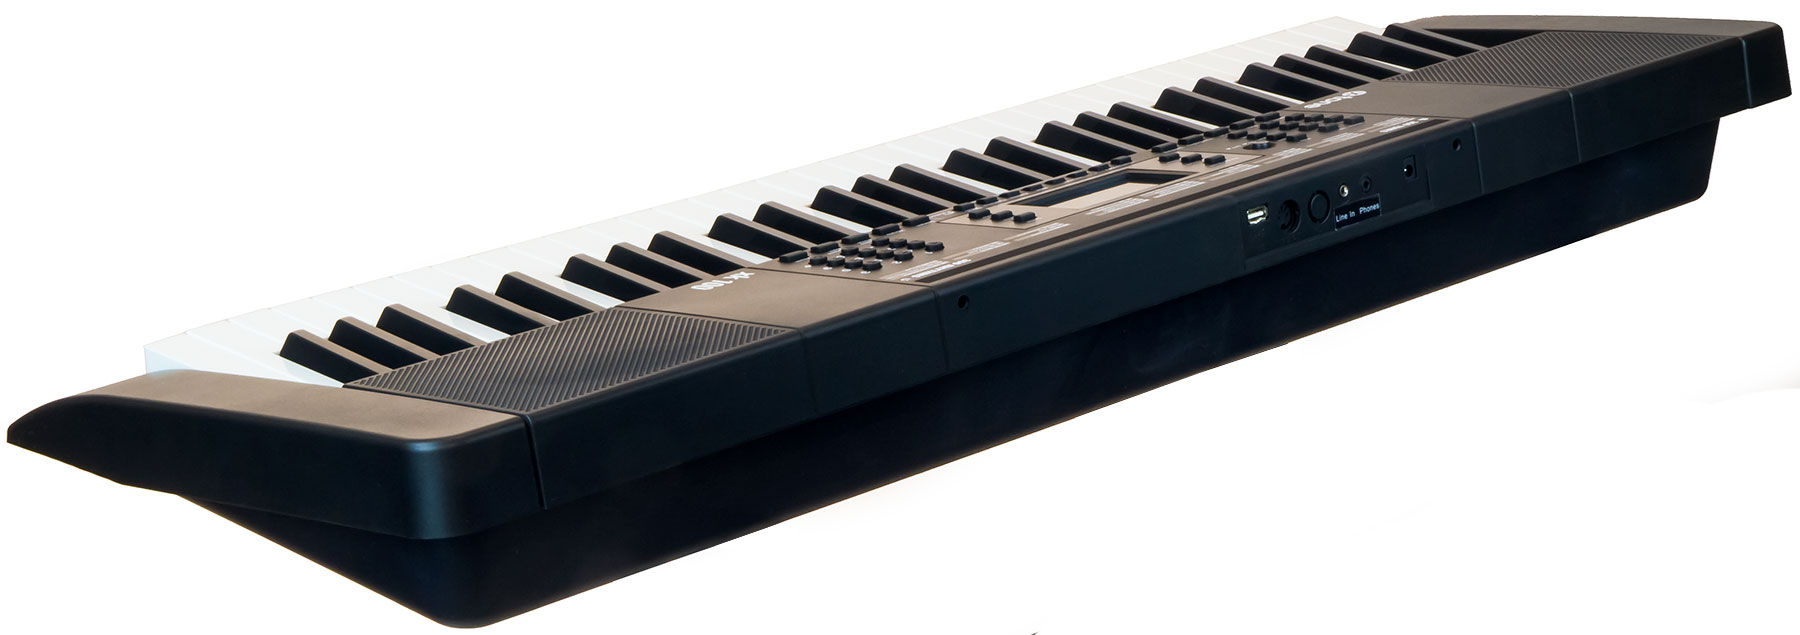 X-tone Xk100 Clavier Arrangeur - Entertainer Keyboard - Variation 2